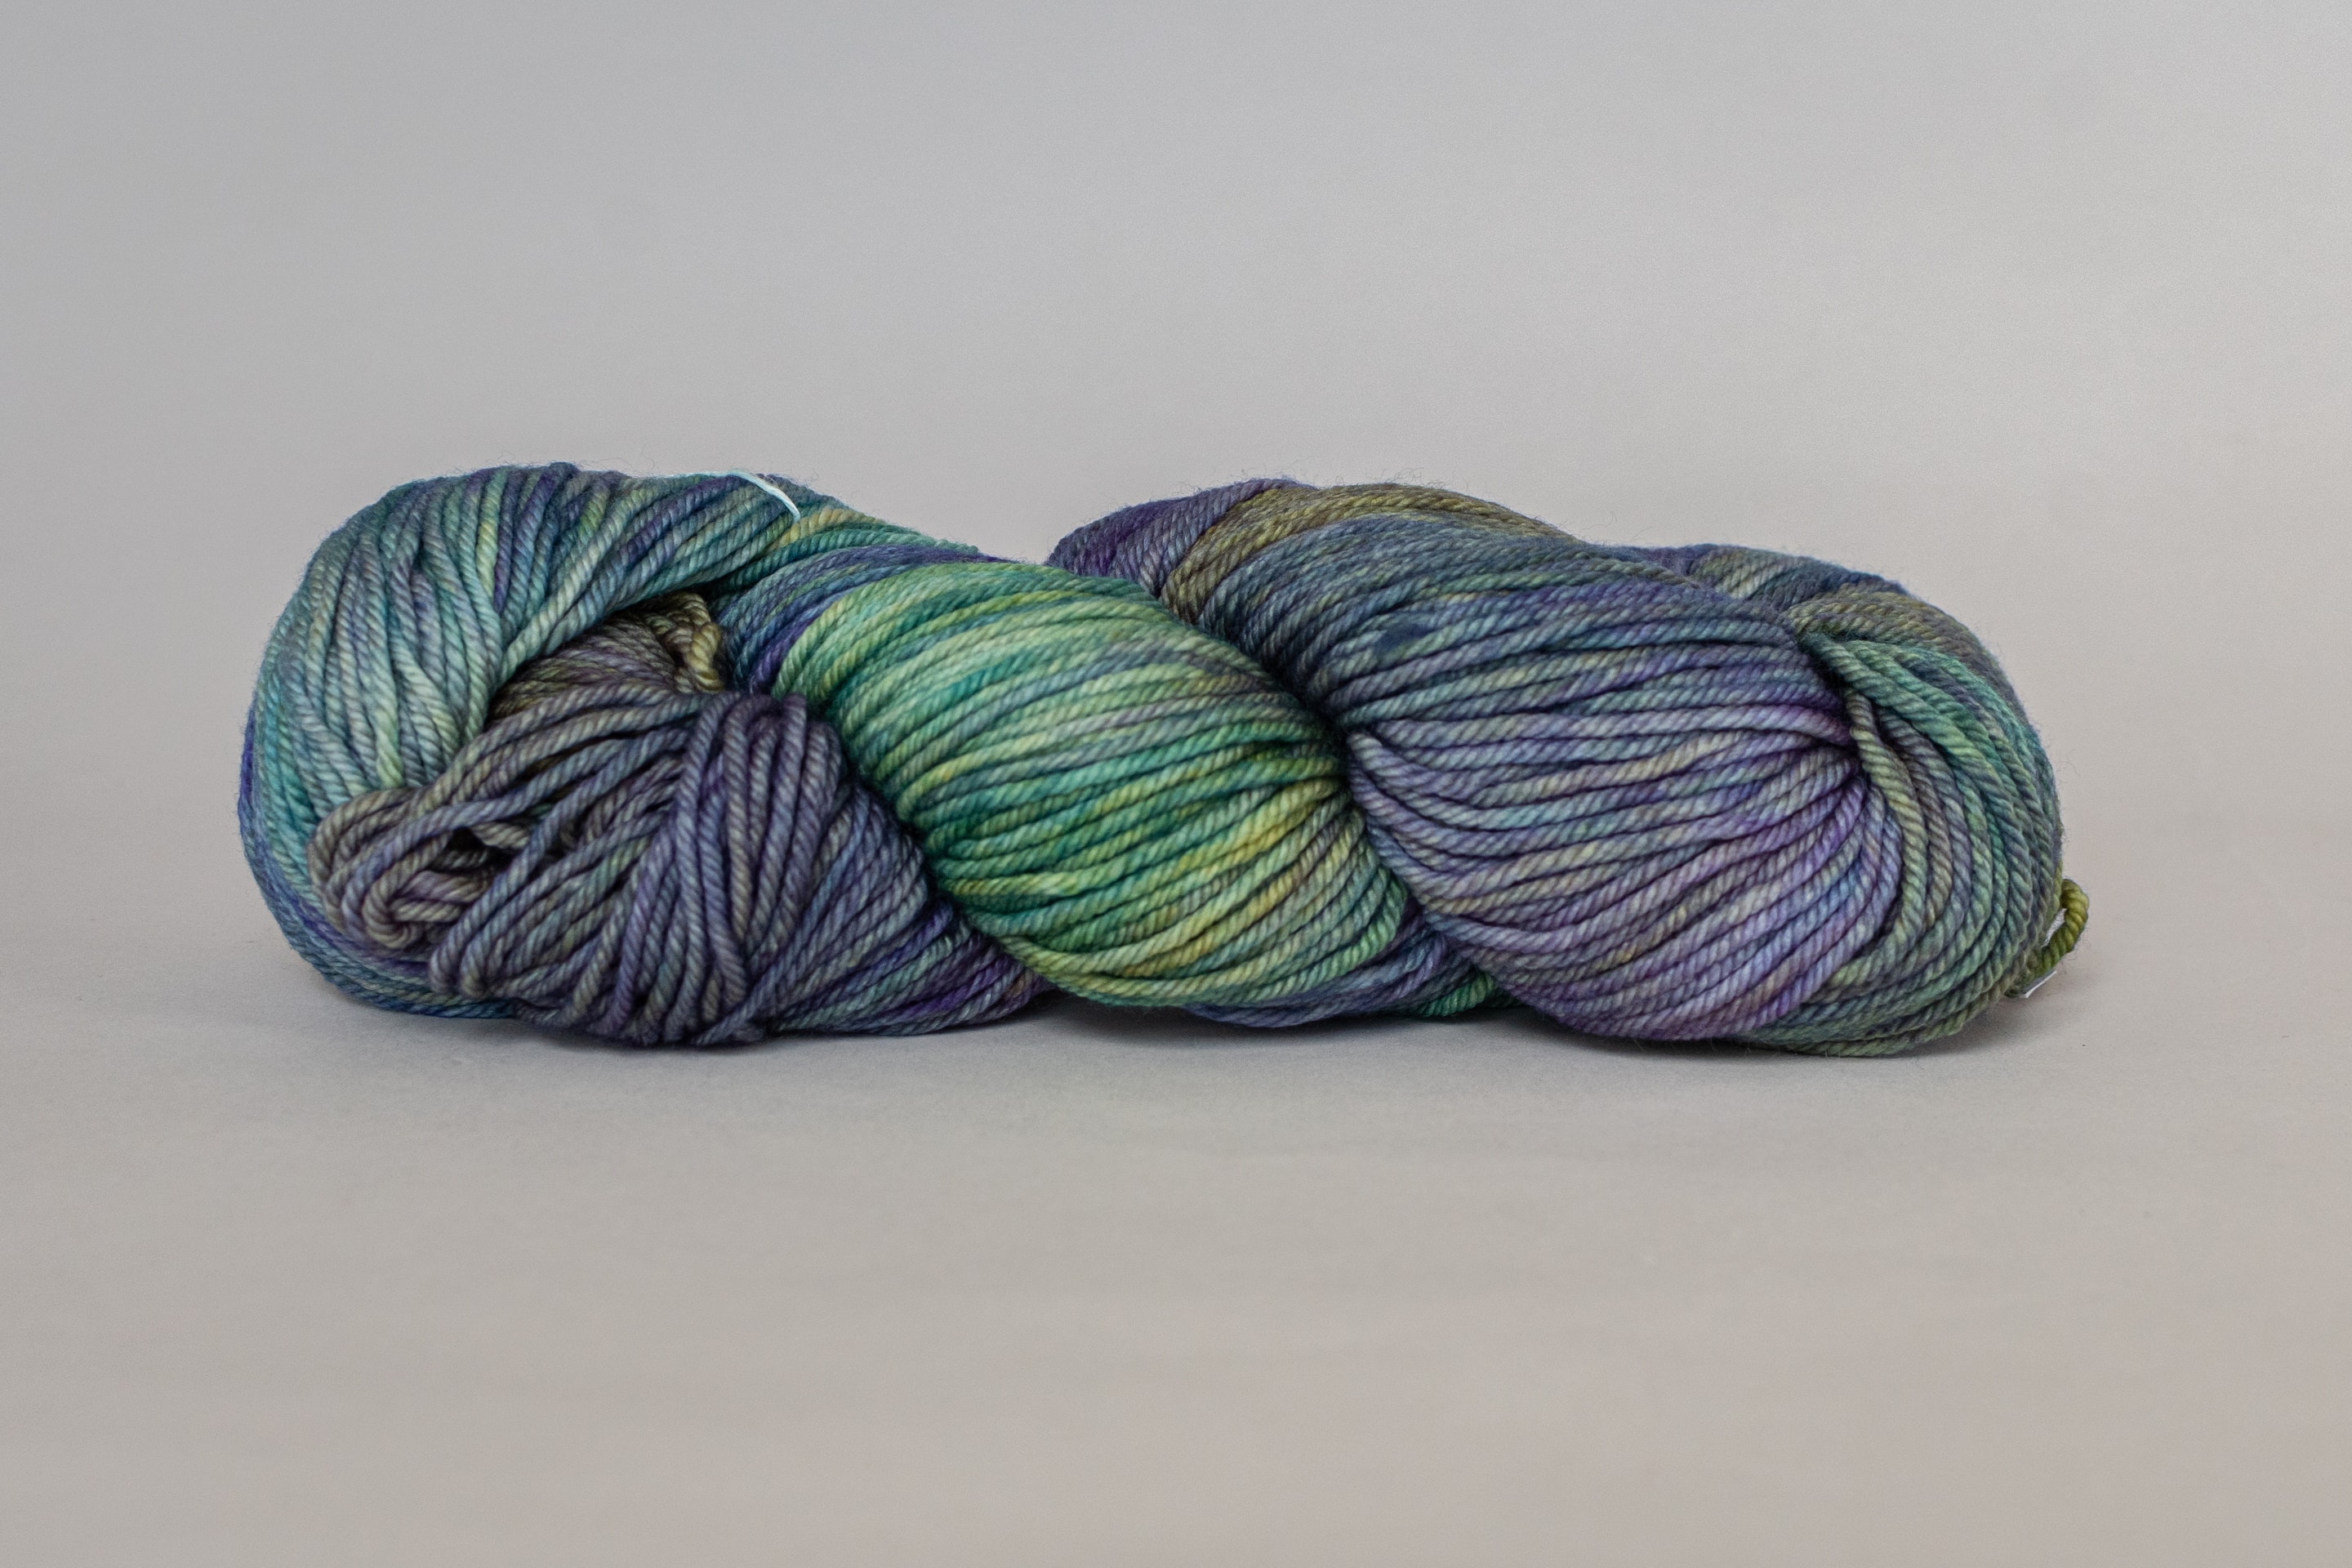 Malabrigo Rios in color Bobby Blue, Worsted Weight Merino Wool Knitting  Yarn, dark ultramarine blue, #027